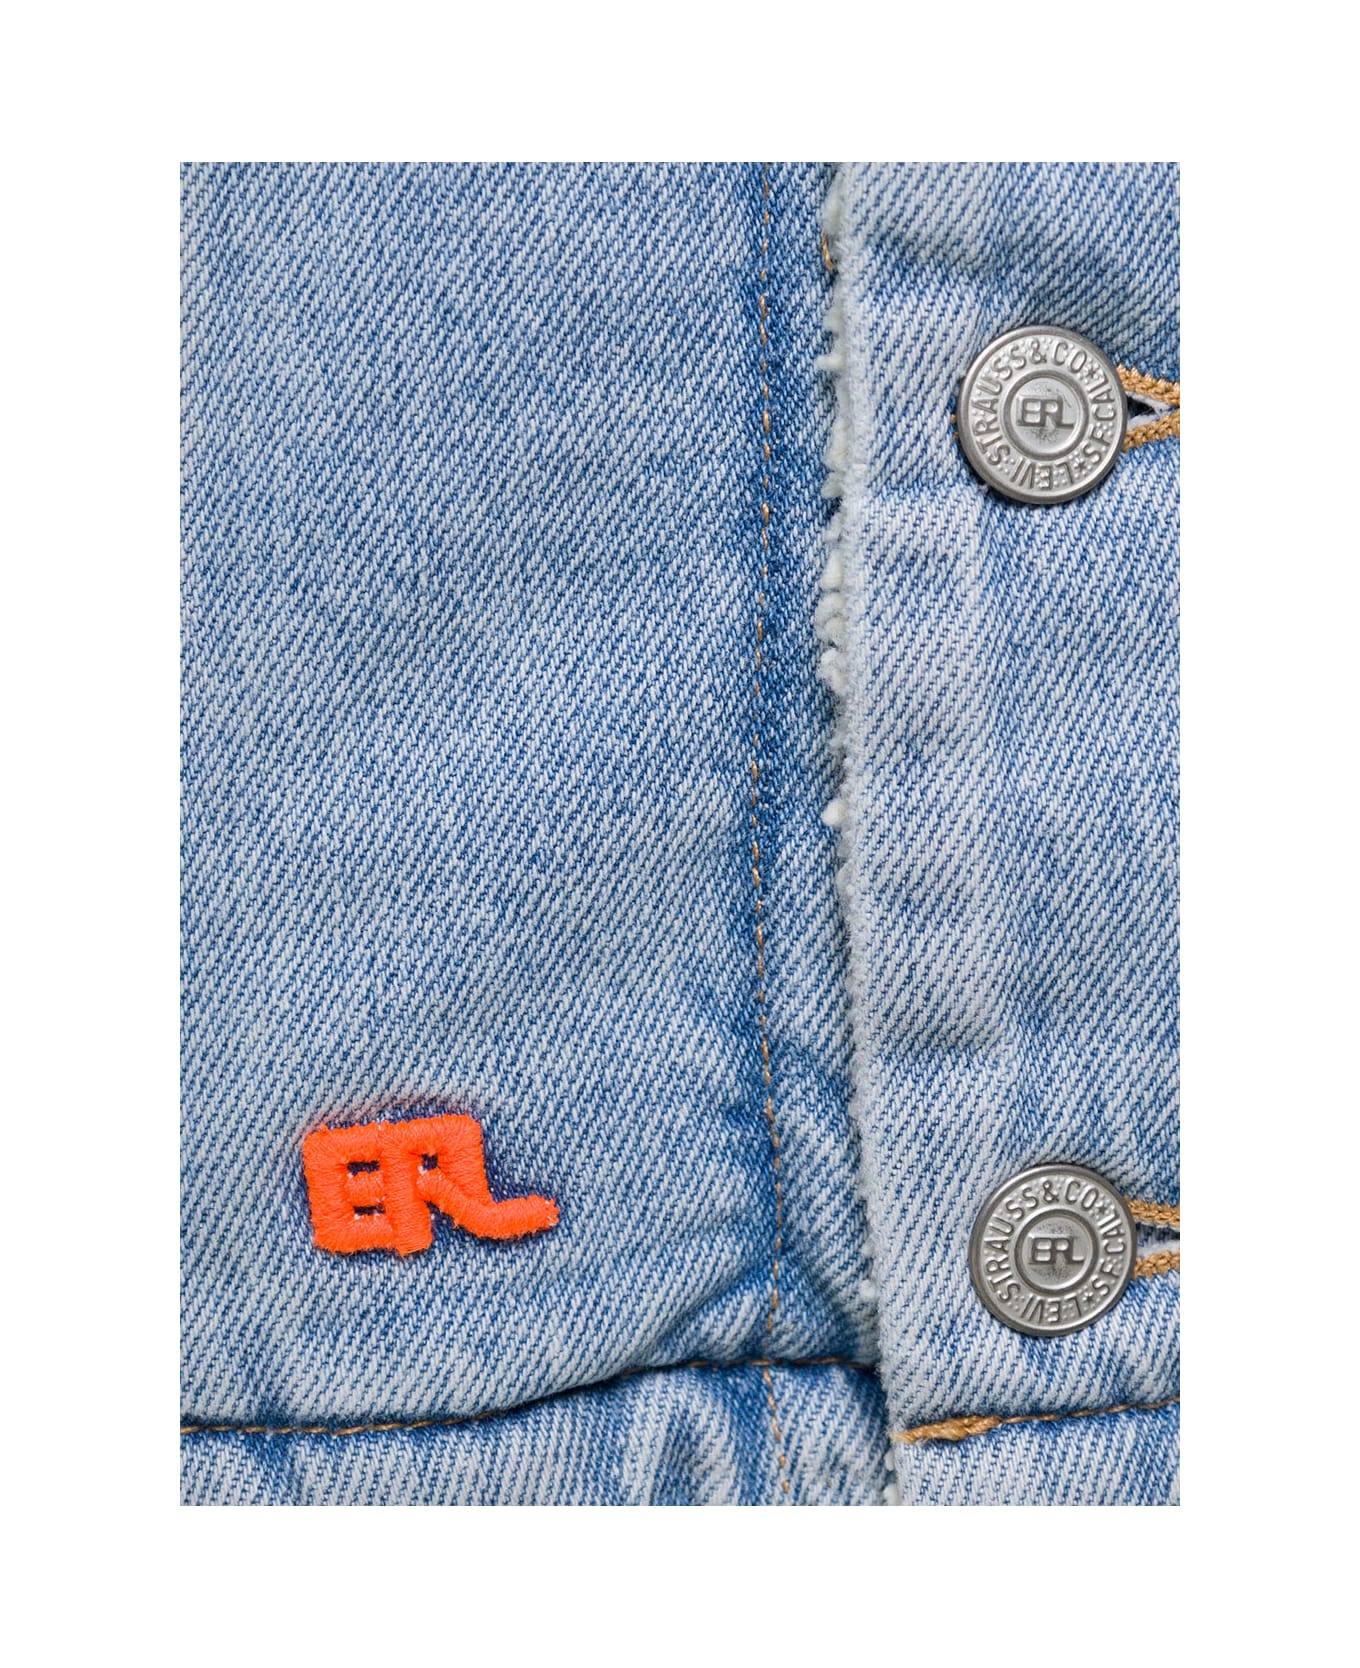 ERL 'sherpa Trucker' Light Blue Jacket With Logo Patch In Cotton Denim Erl X Levi's - Light blue ジャケット